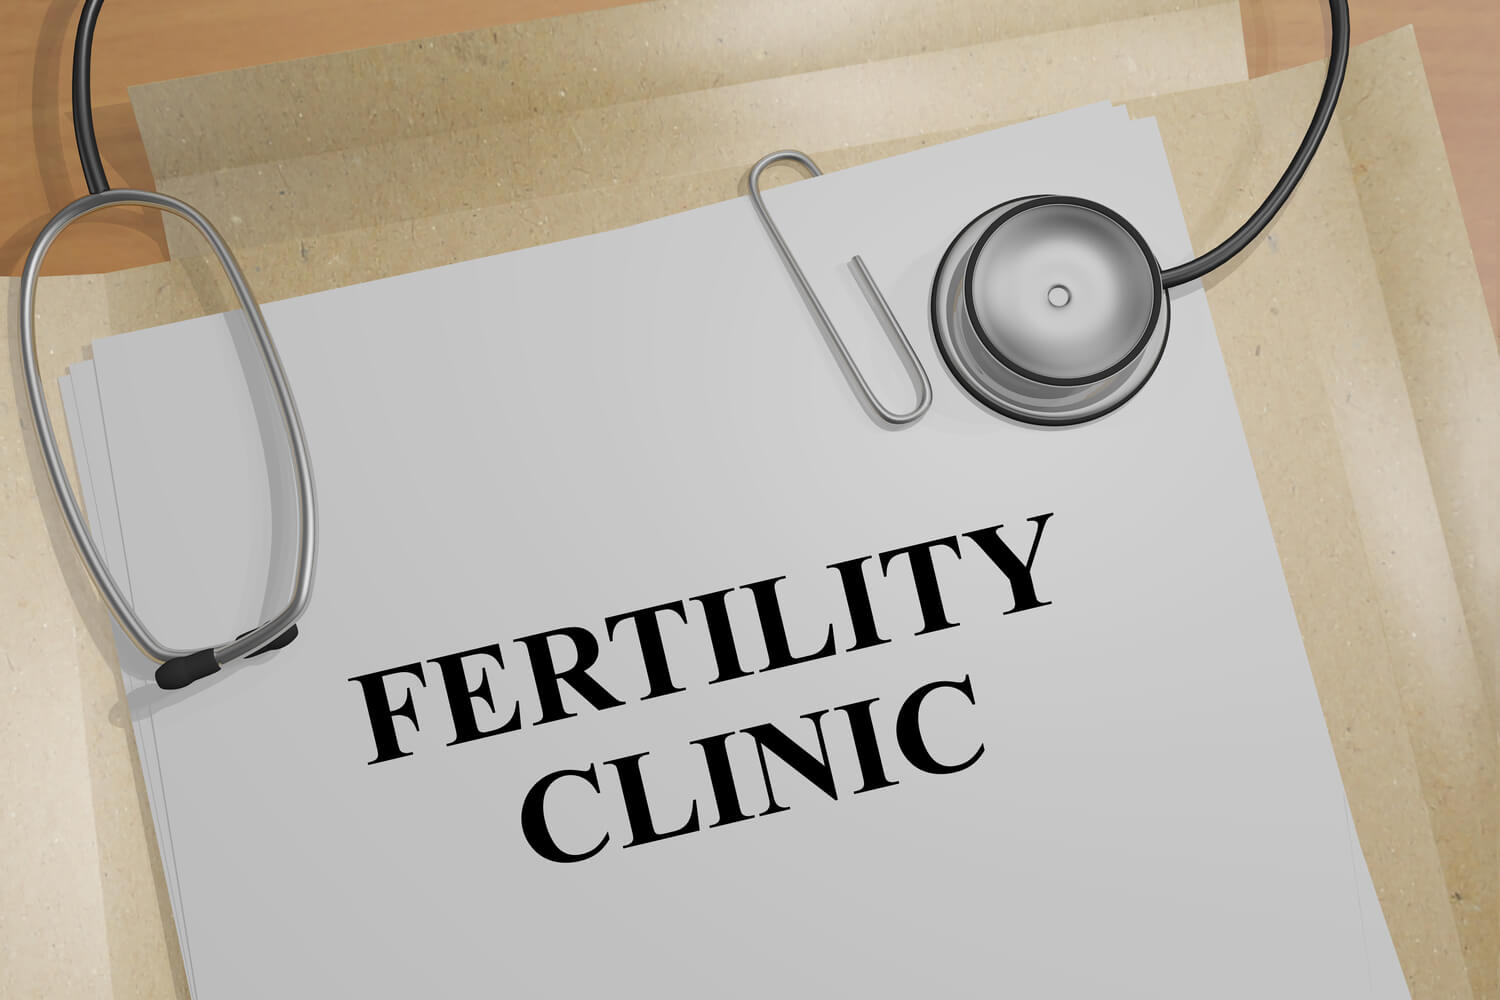 Things Fertility Clinics Won’t Tell You